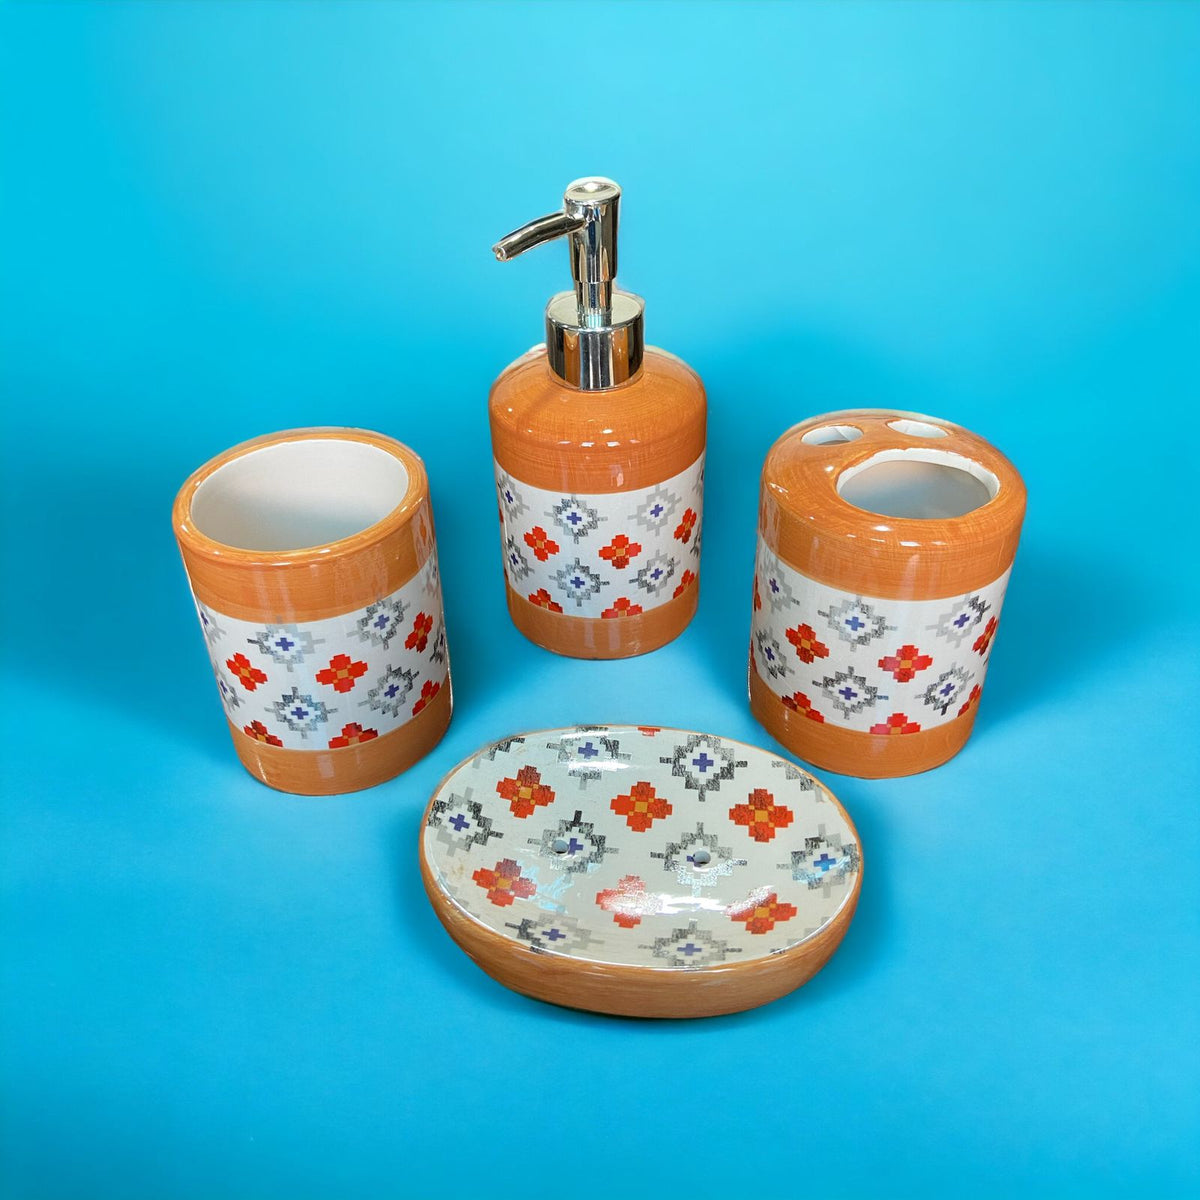 Orange Print Designed Bath Set - 4pcs